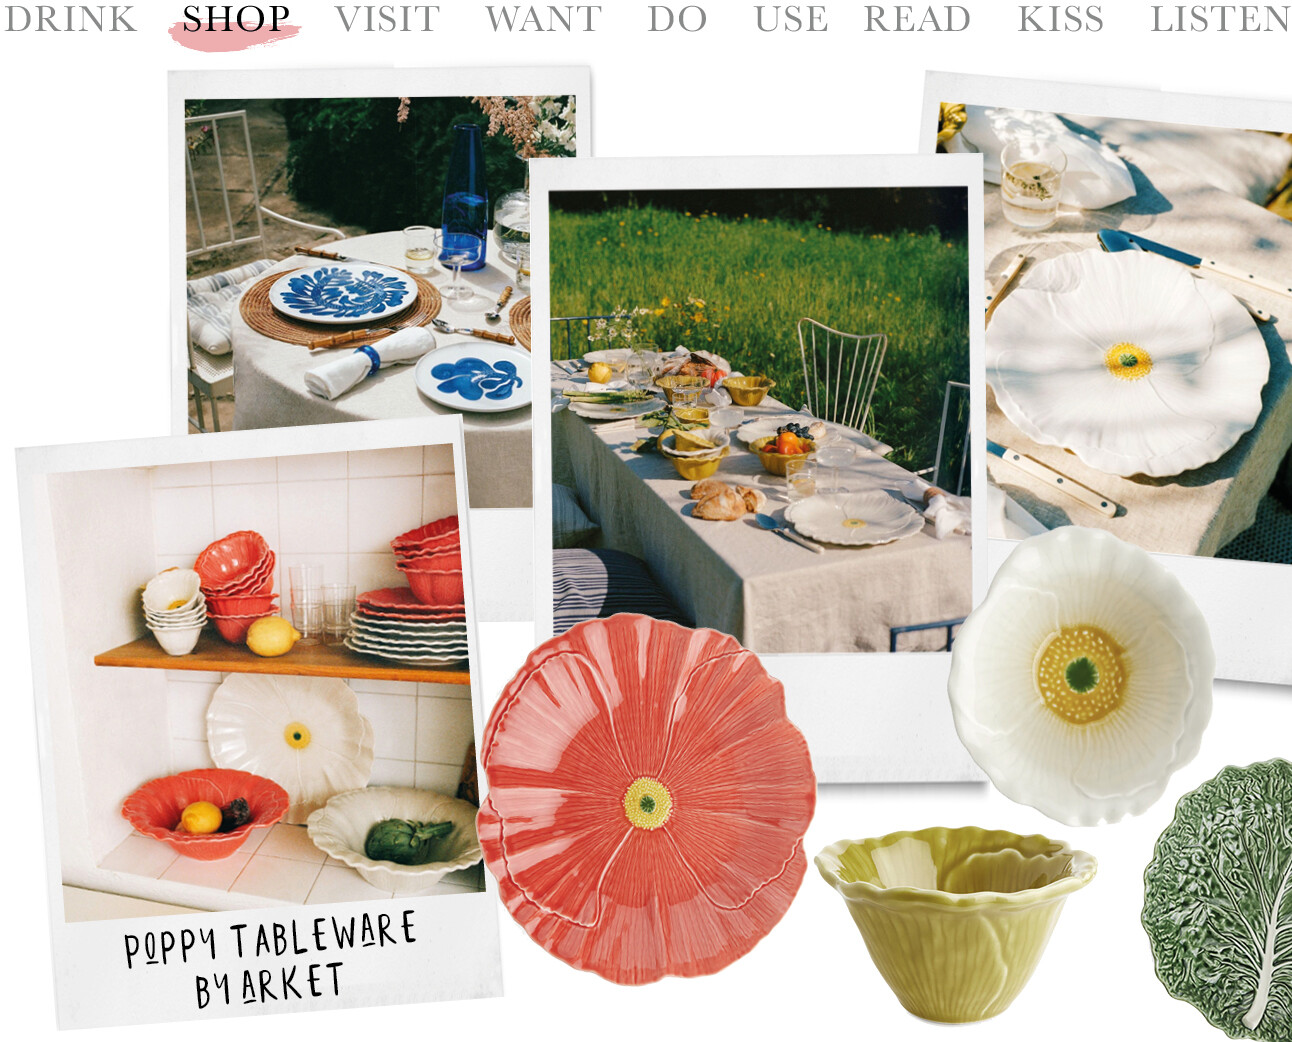 Poppy tableware by Arket